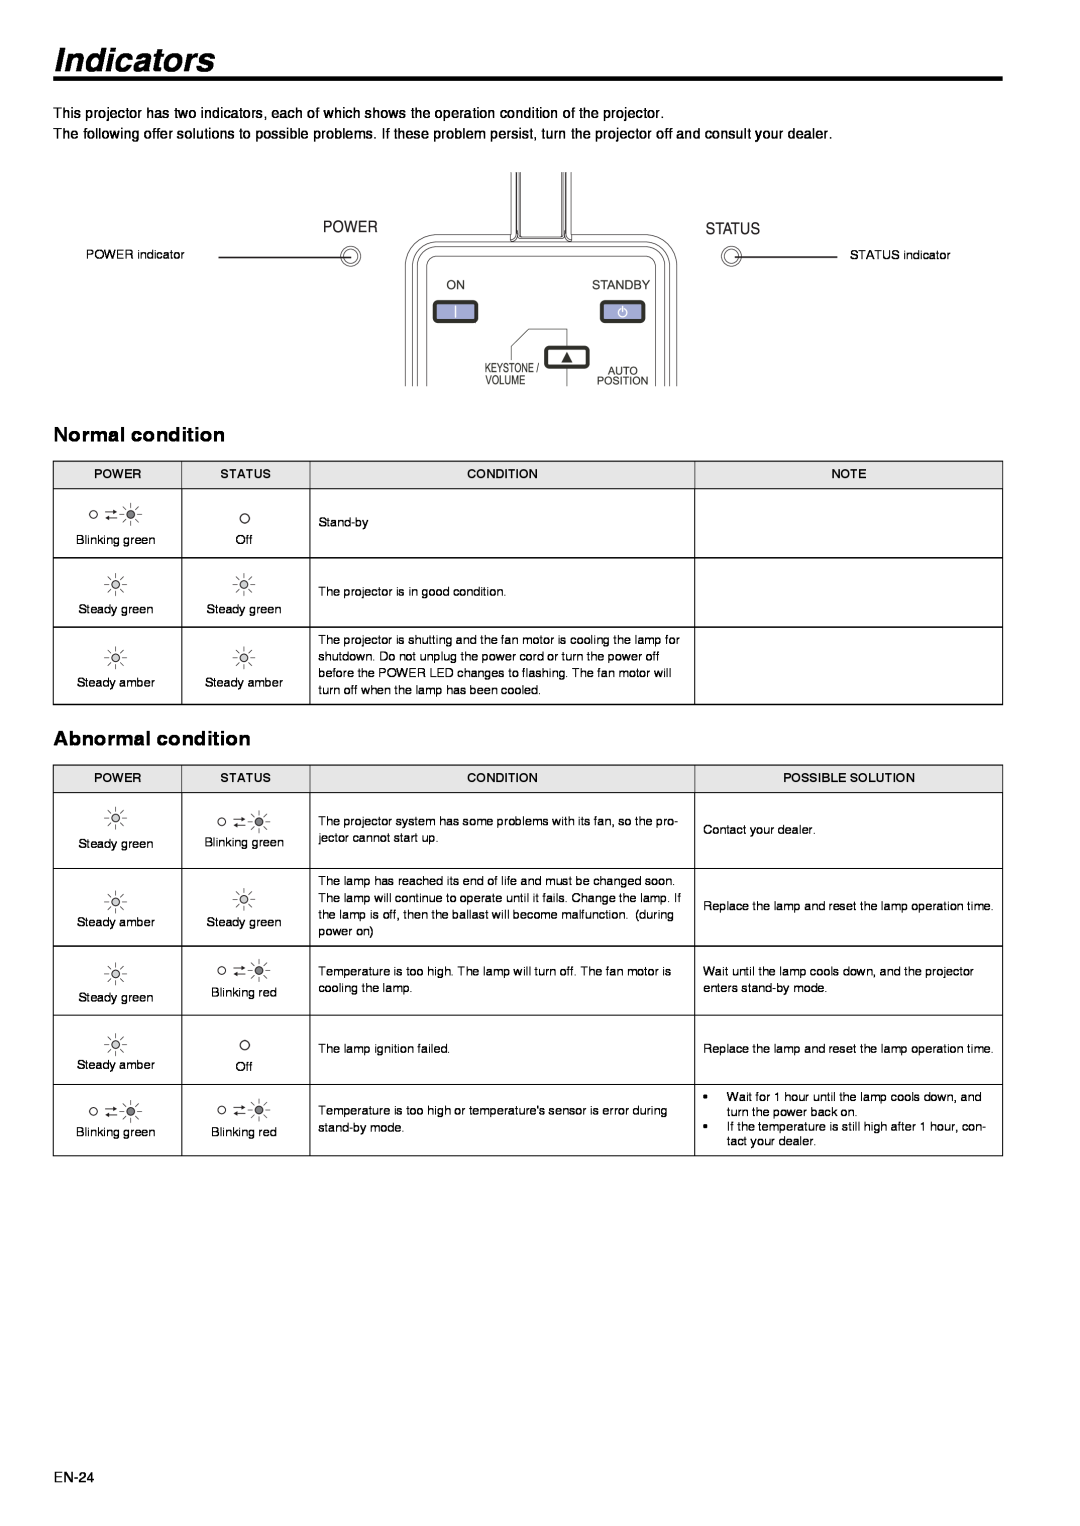 Mitsubishi Electronics XD211U user manual Indicators, Normal condition, Abnormal condition 